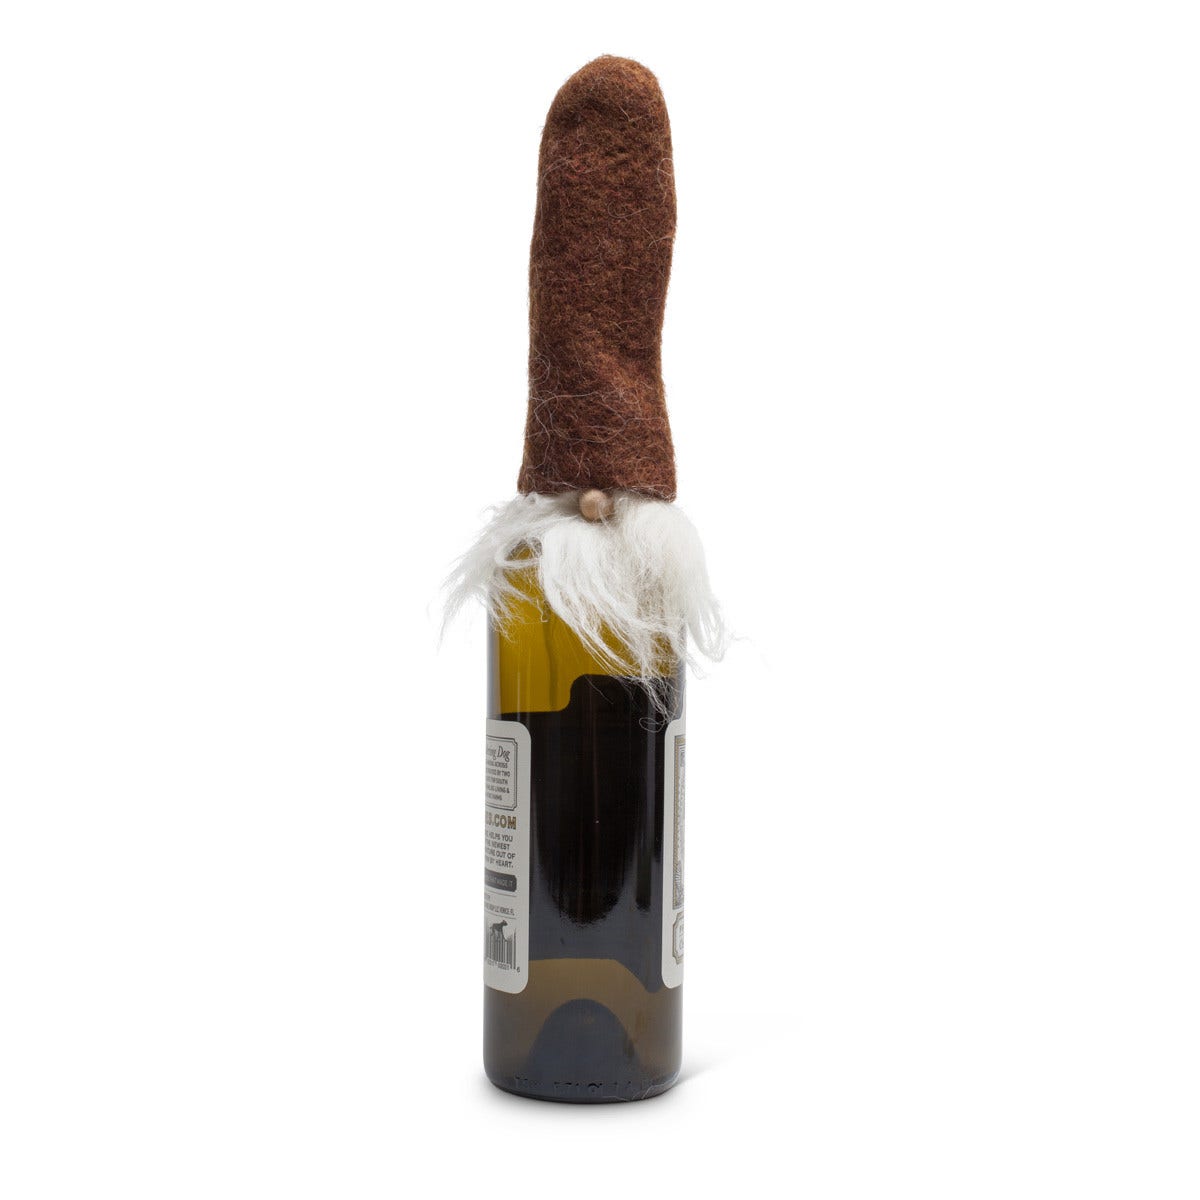 Kalalou Felt Santa Bottle Topper with Wispy Beard-Brown Brown 12027401